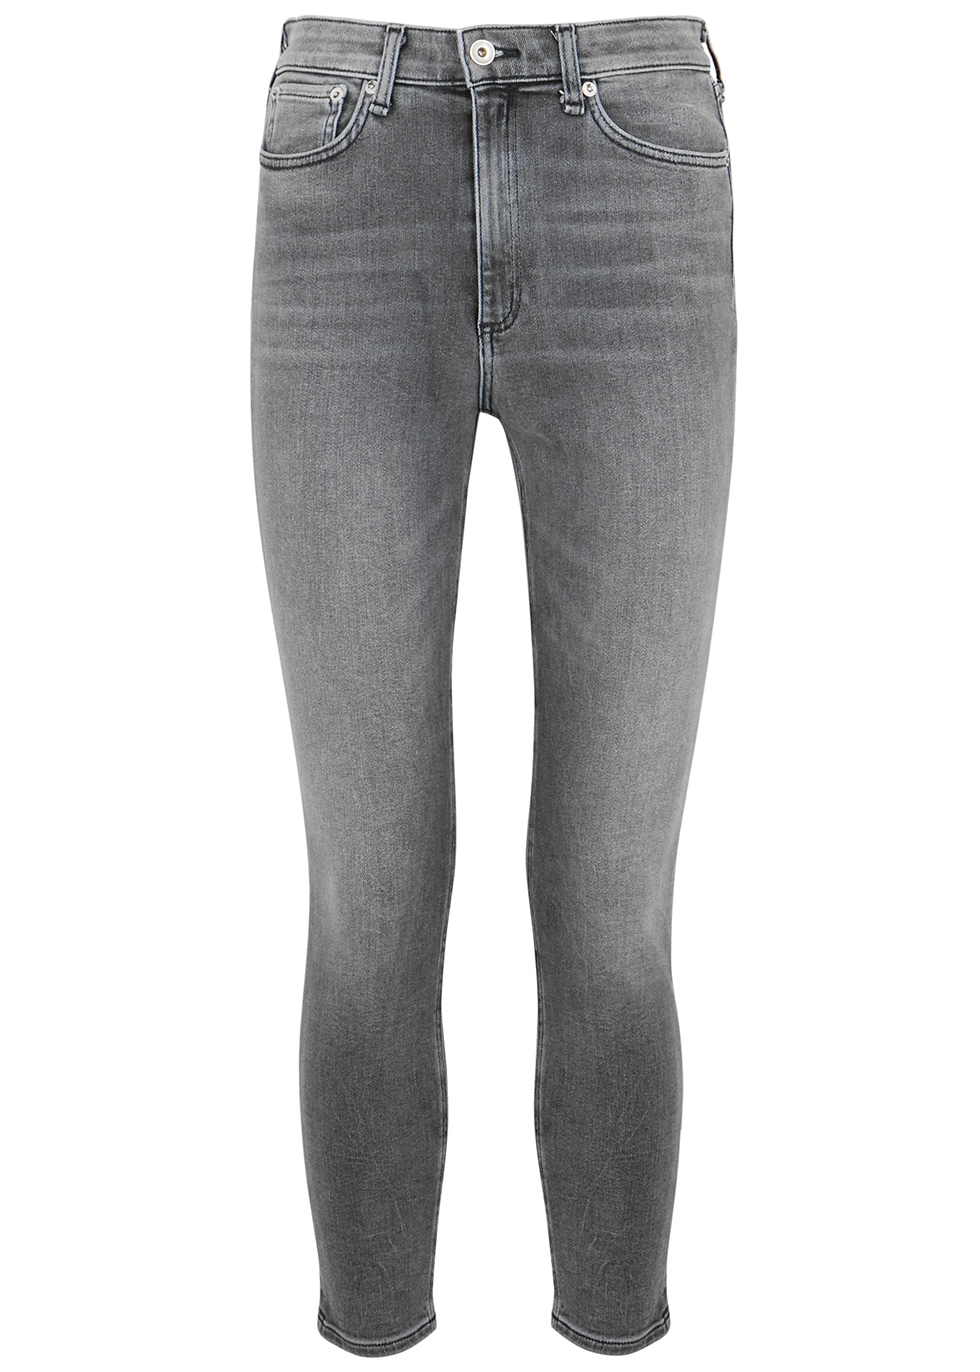 Nina grey cropped skinny jeans